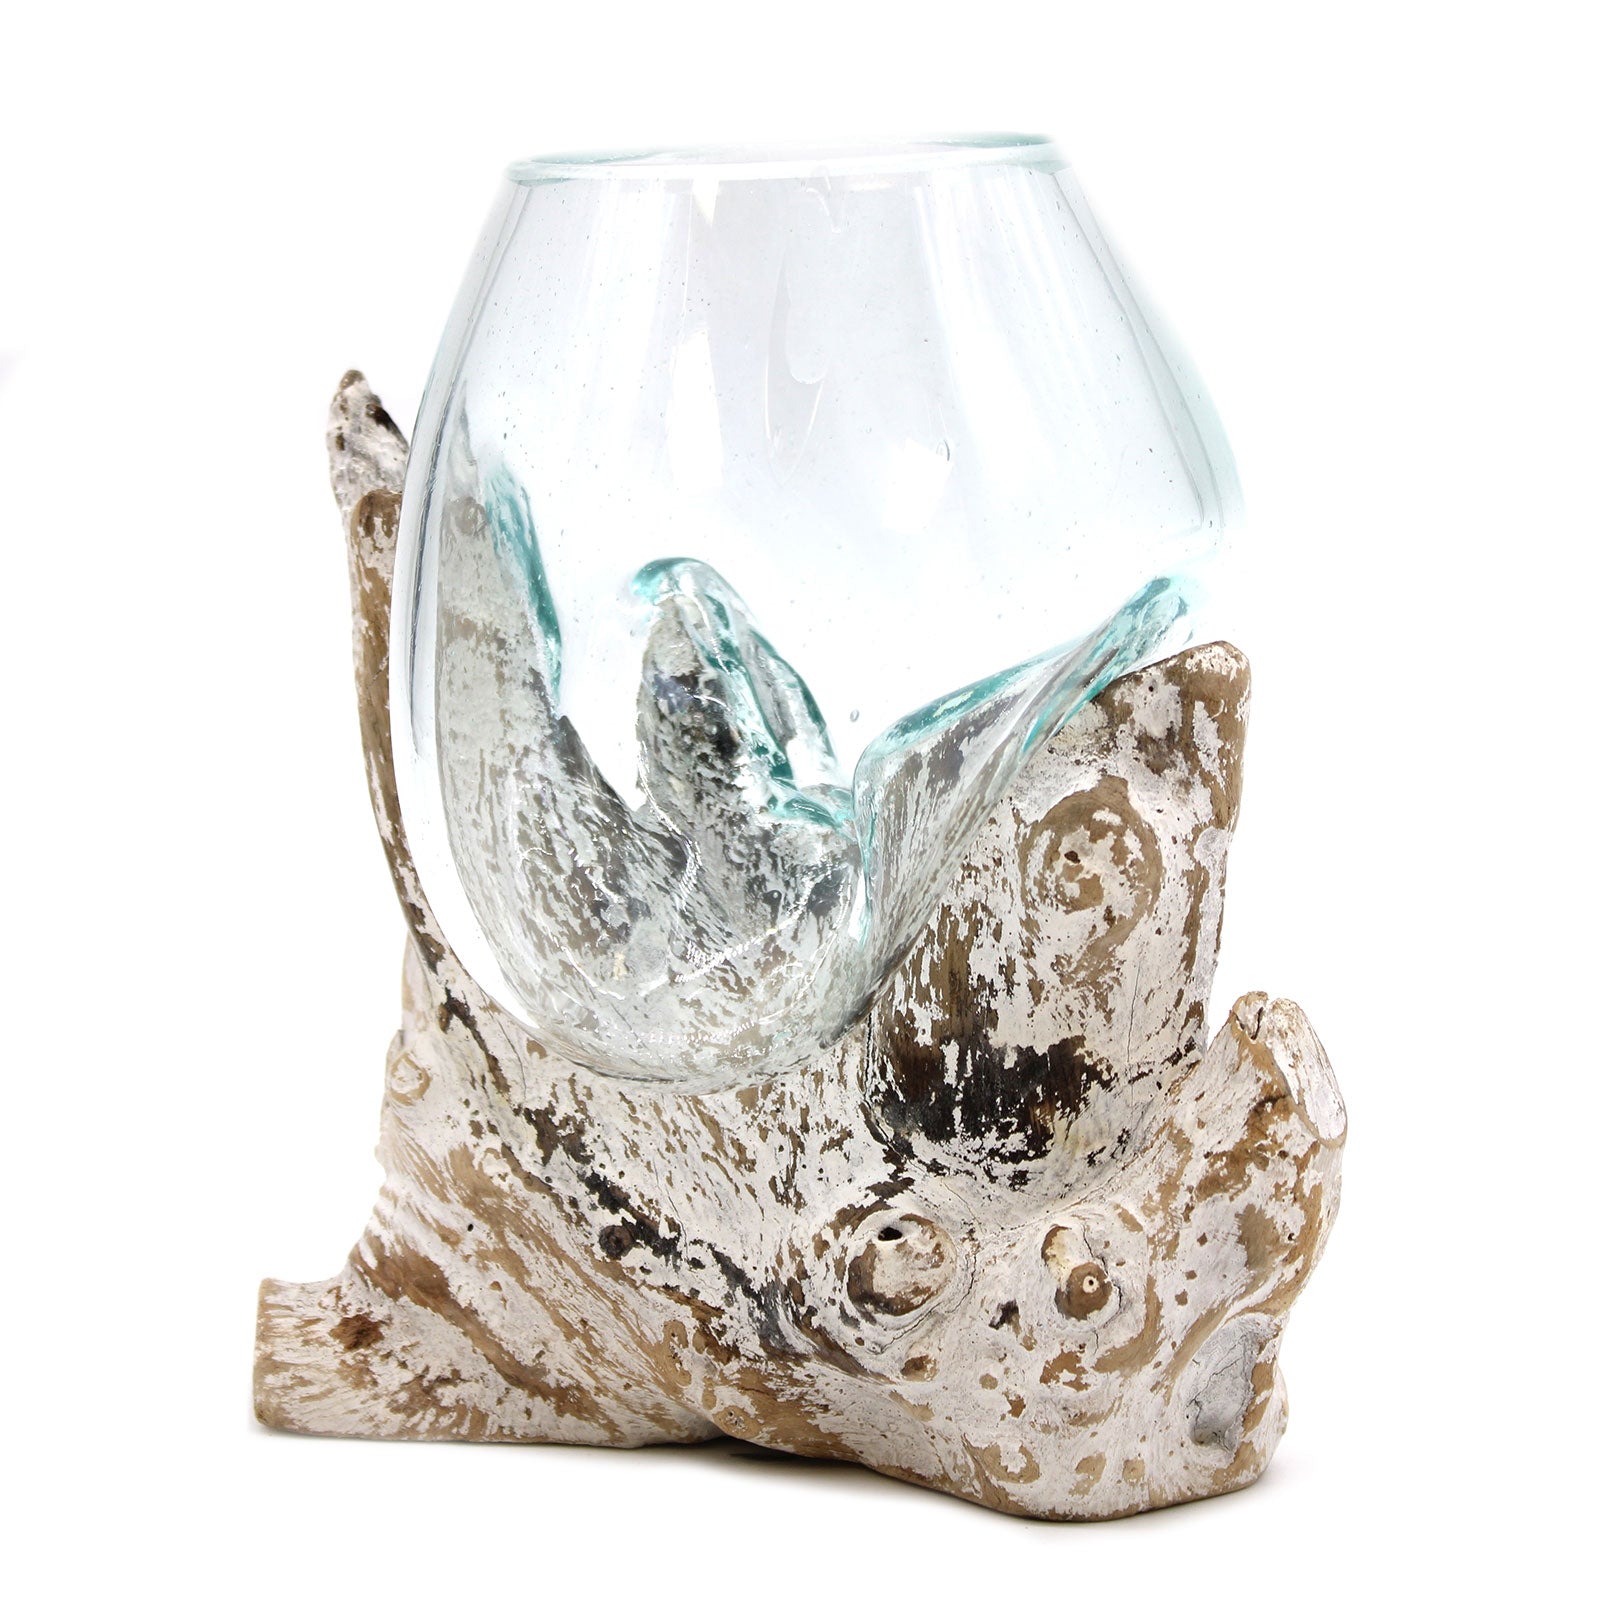 View Molten Glass on Whitewash Wood Medium Bowl information